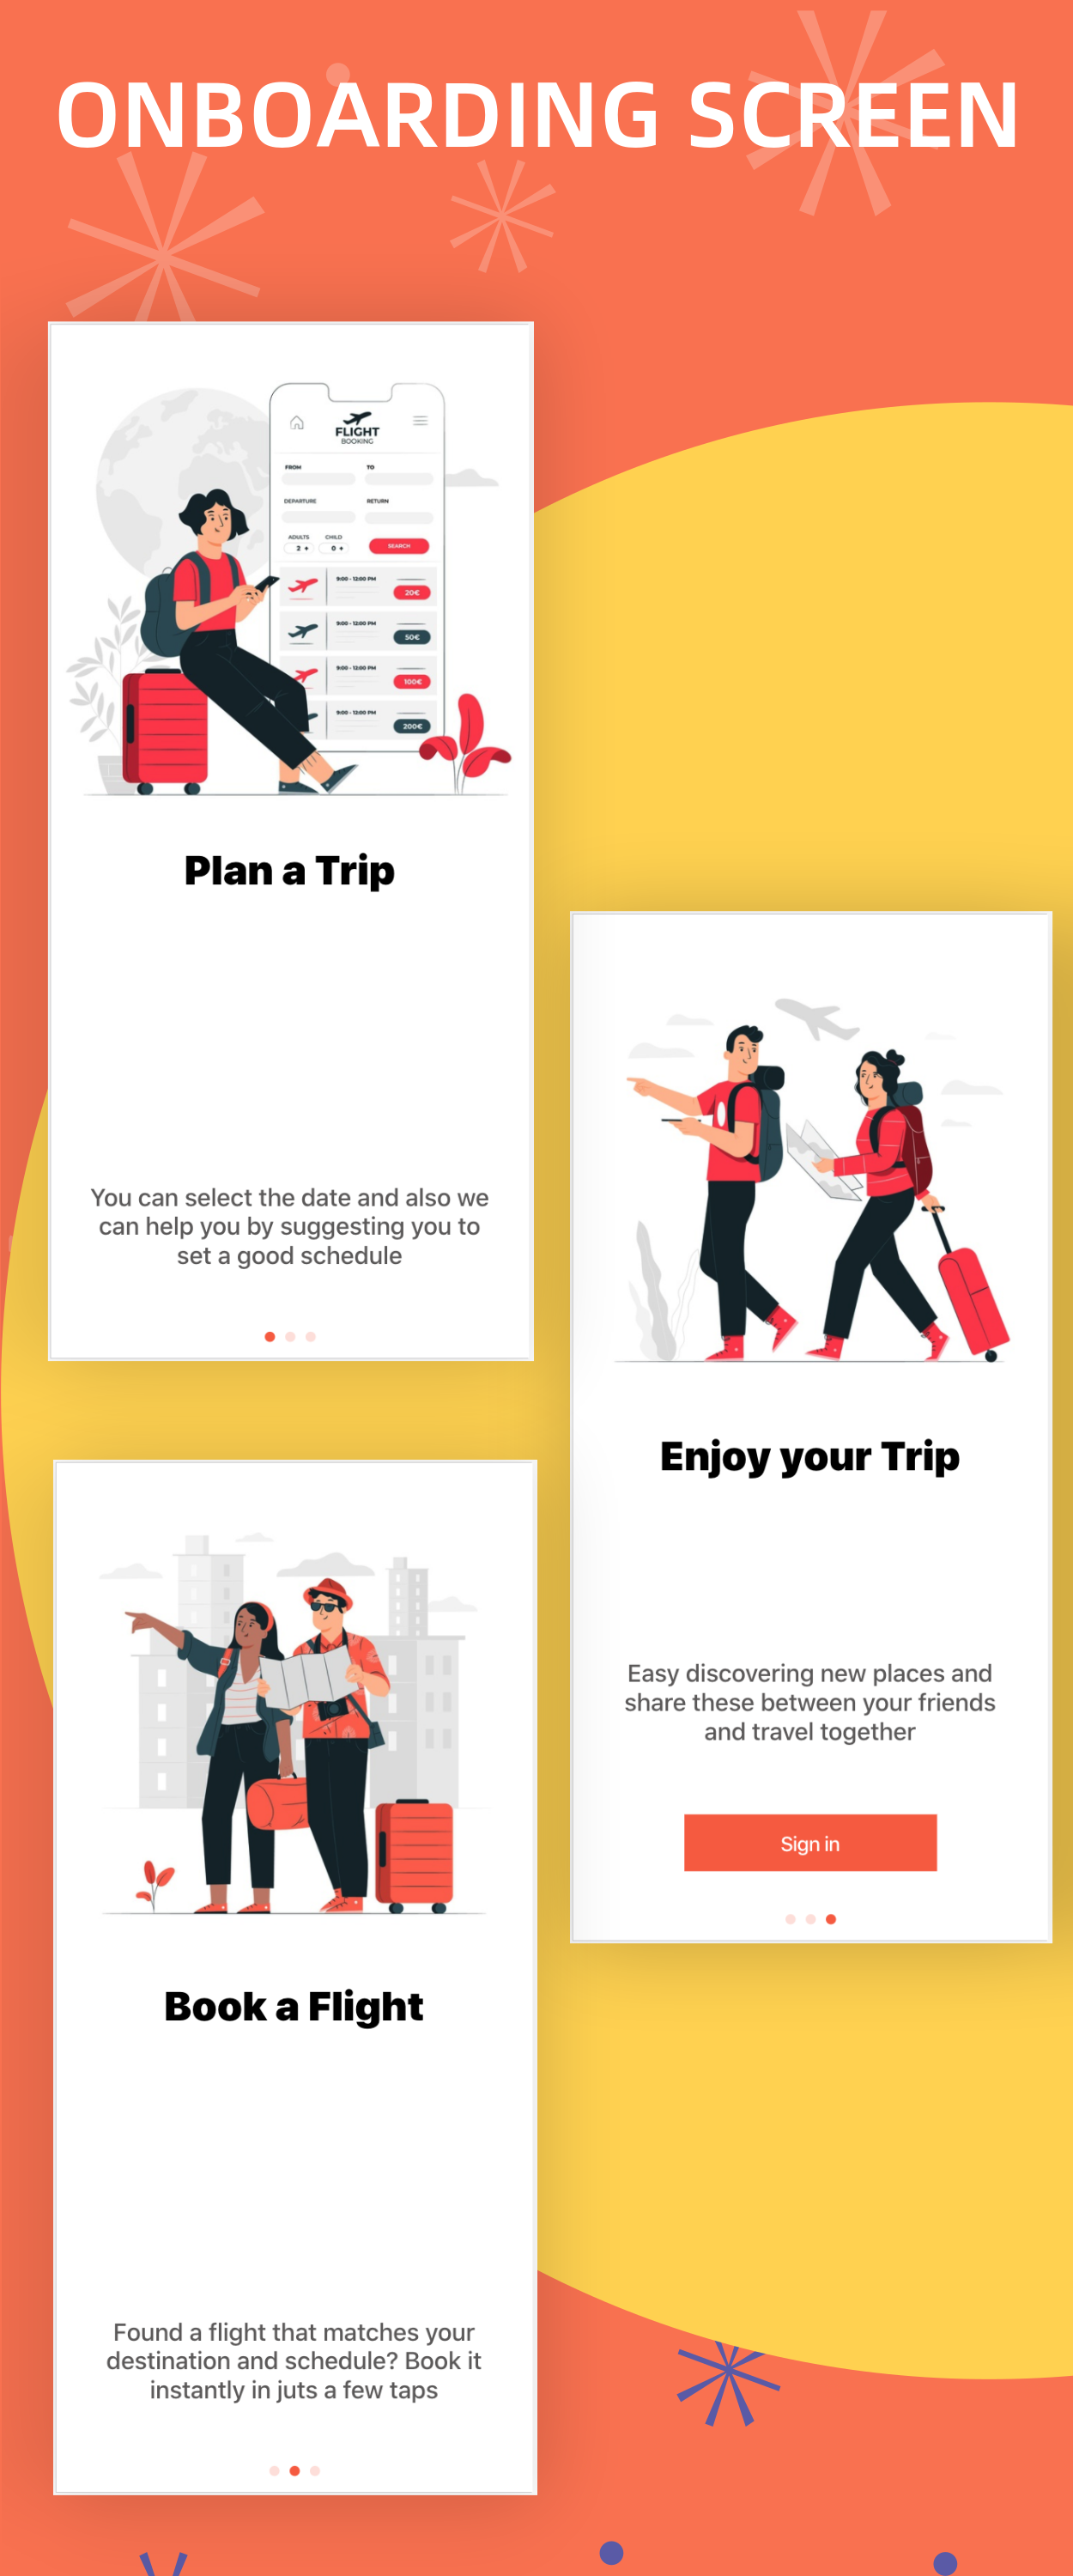 TravelEasy - A Travel Agency Theme UI App By Ionic 5 (Car, Hotel, Flight Booking) - 10